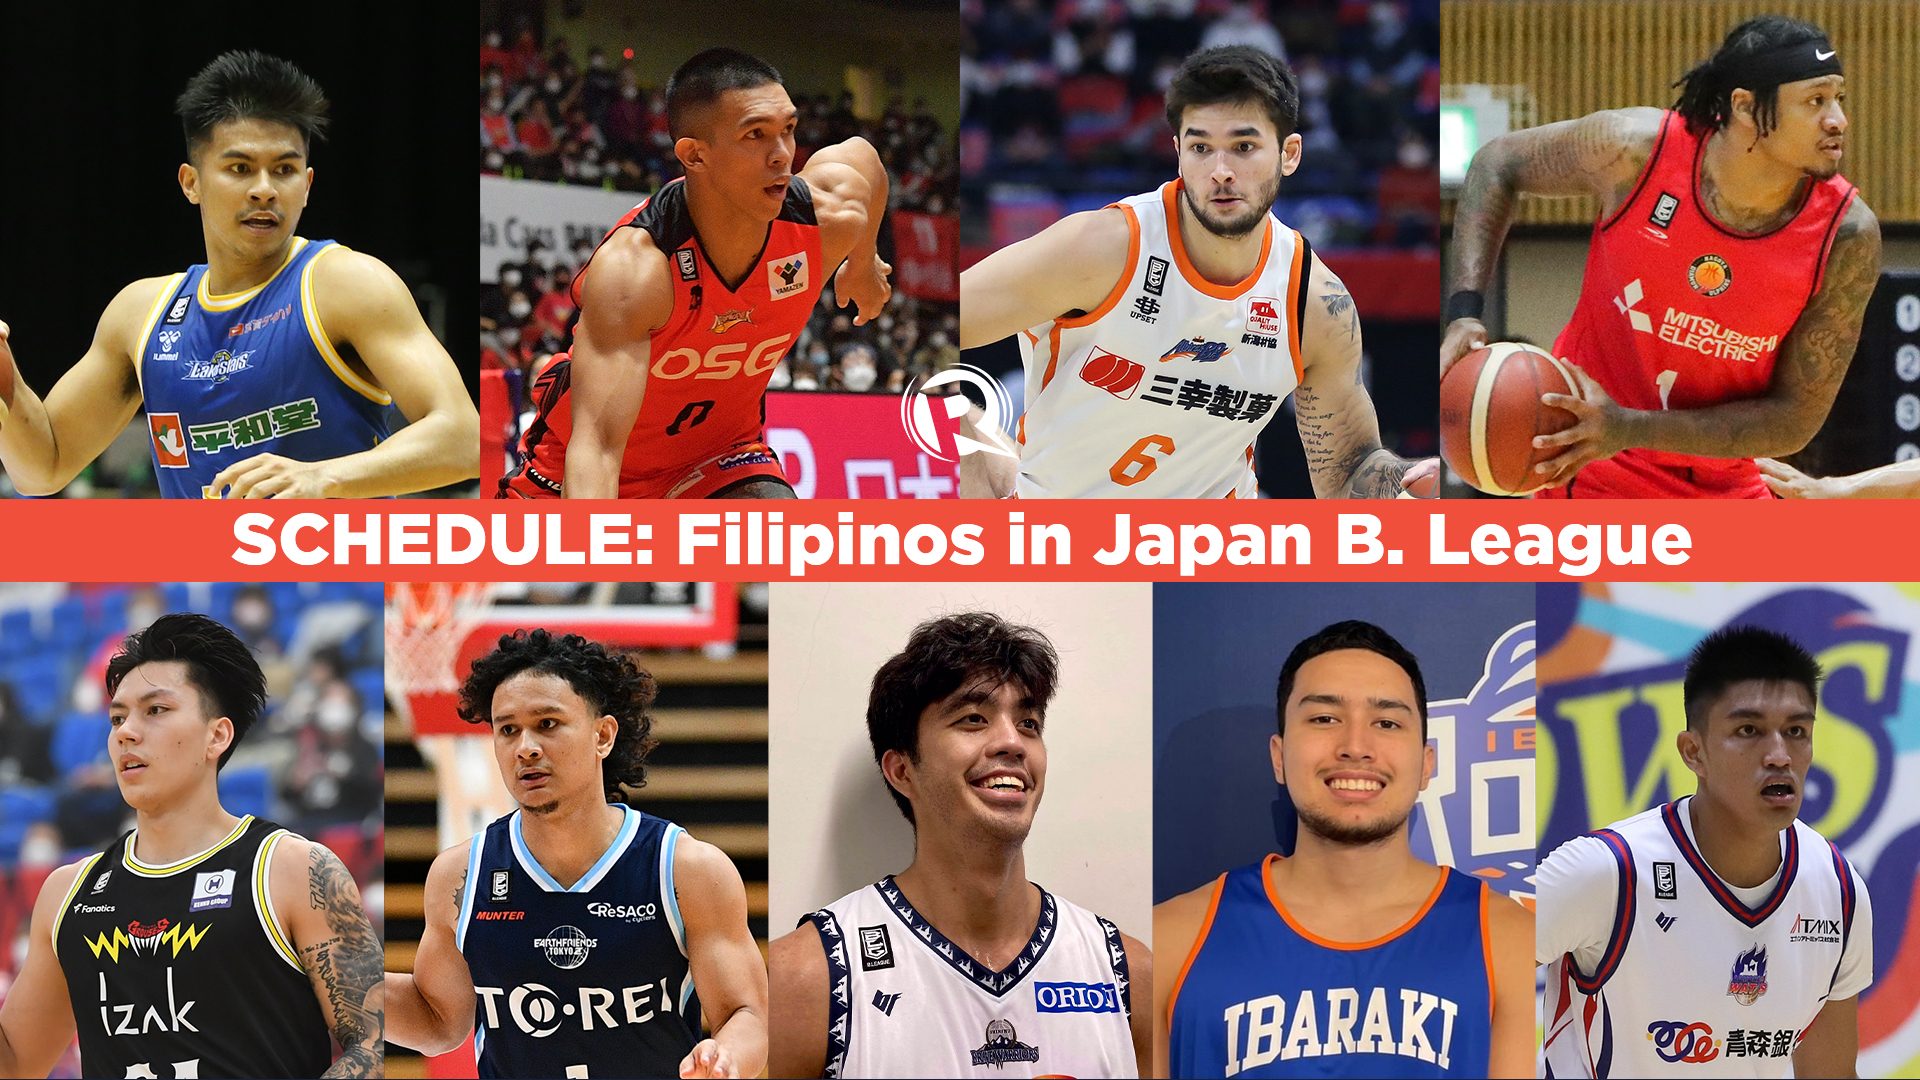 SCHEDULE: Filipino basketball players in Japan B. League